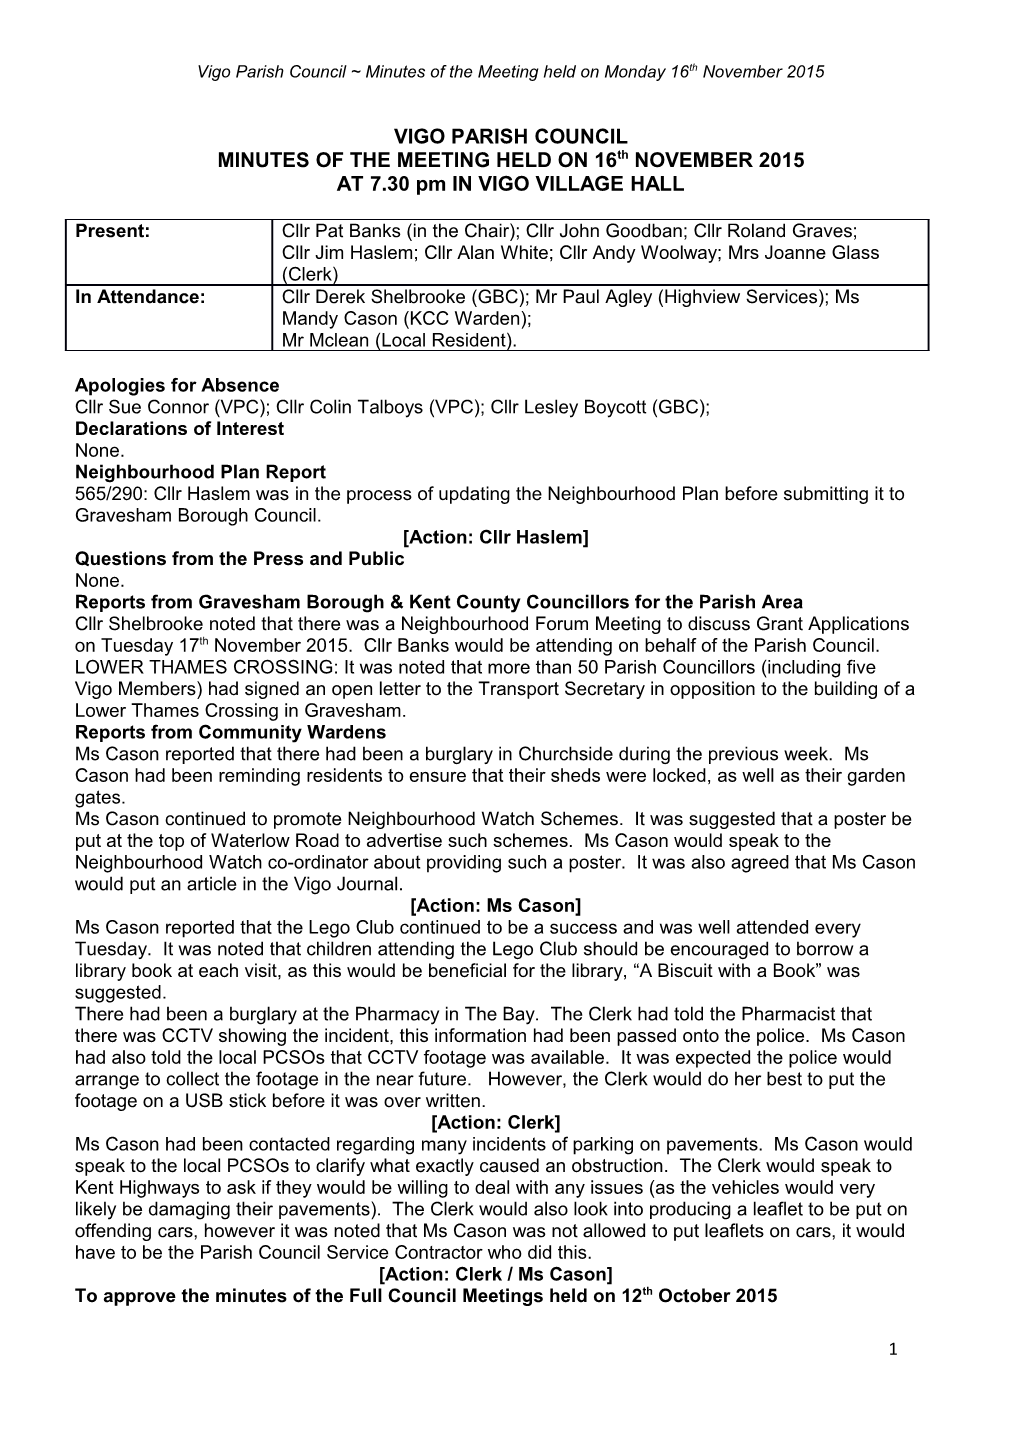 Vigo Parish Council Minutes of the Meeting Held on Monday 16Th November 2015